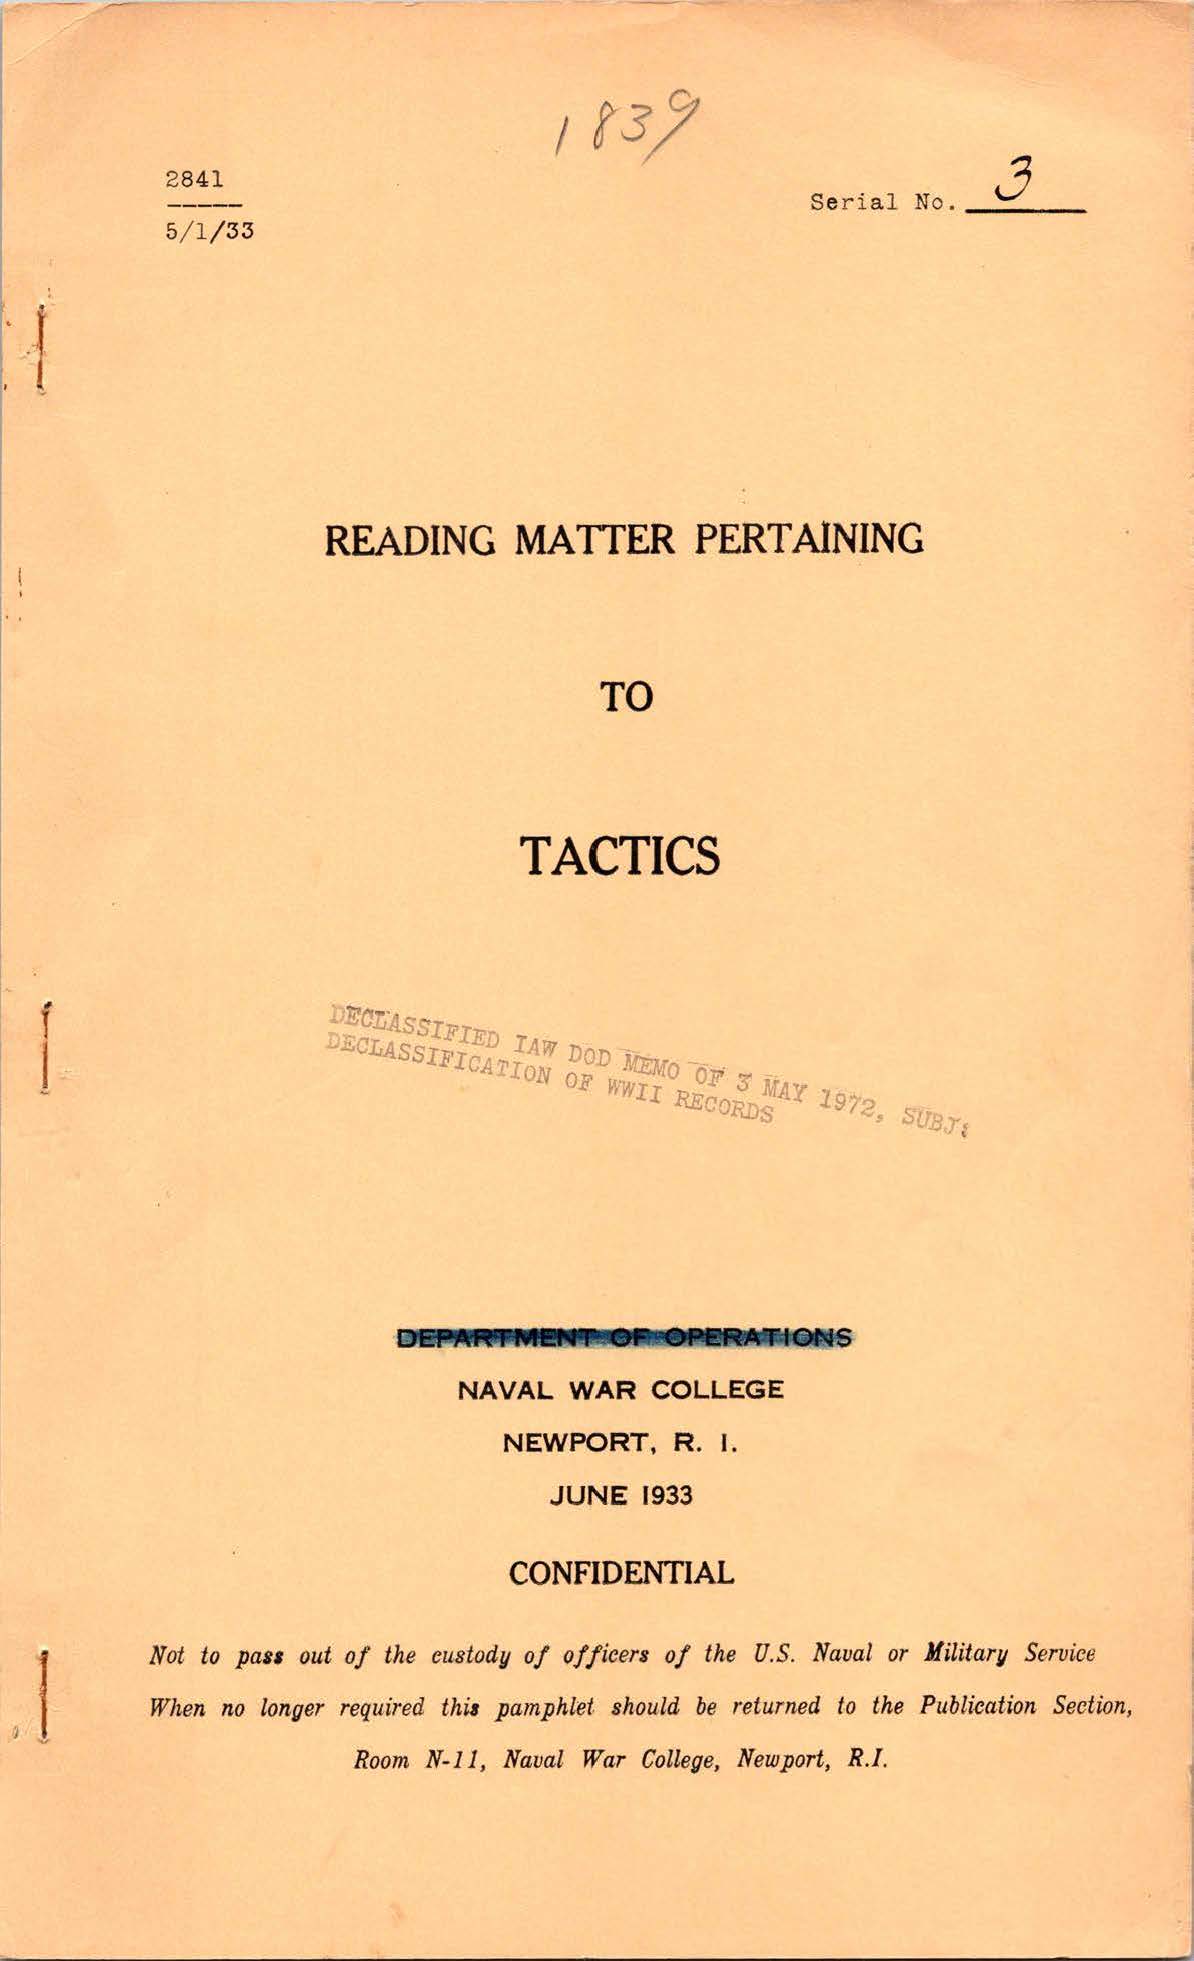 Reading Matter Pertaining to Tactics